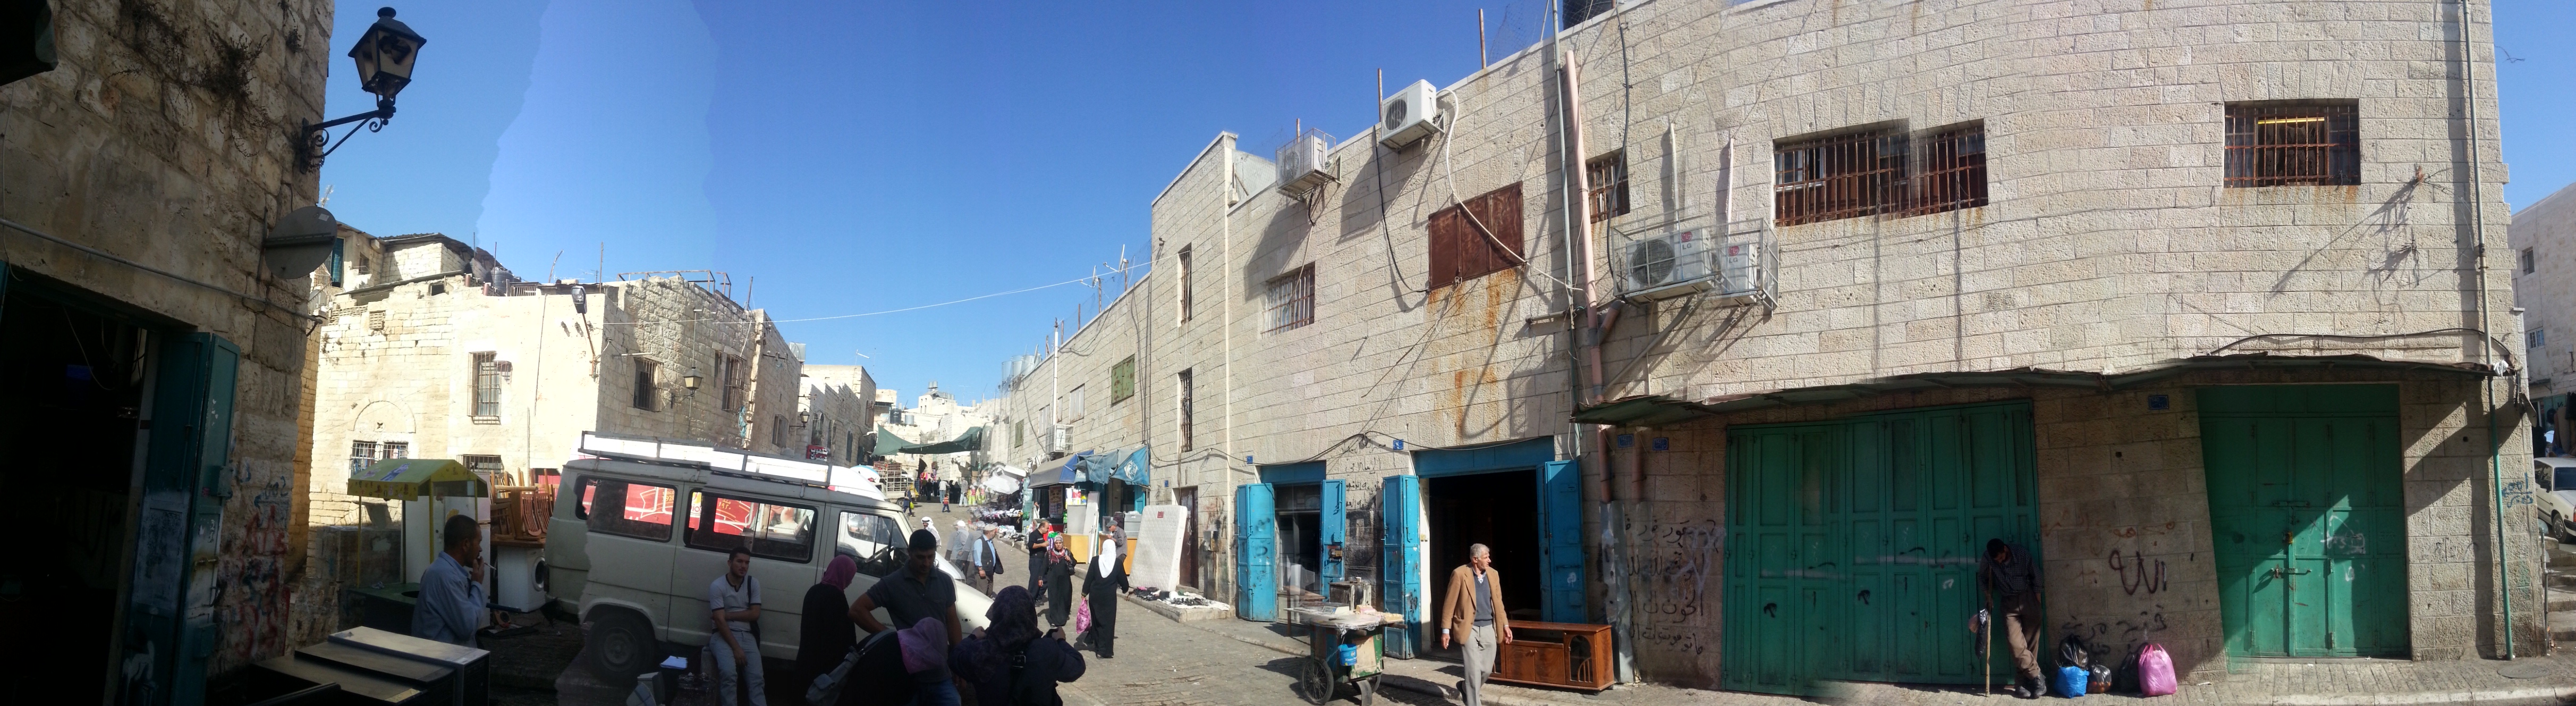 Revitalisation of the Old Market of Bethlehem